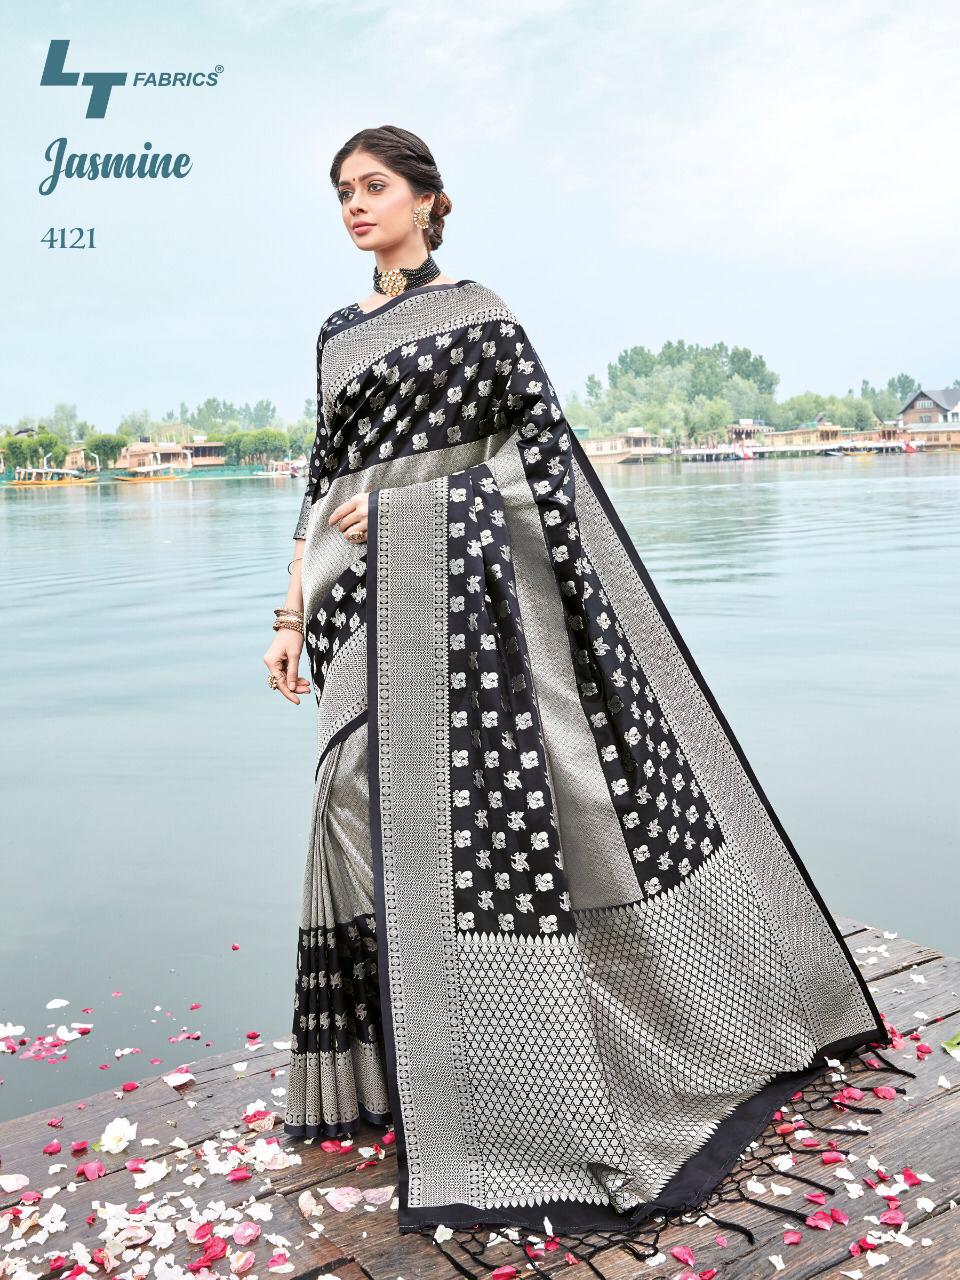 Lt Fashion Presents Jasmine Beautiful Silk Sarees Wholesaler